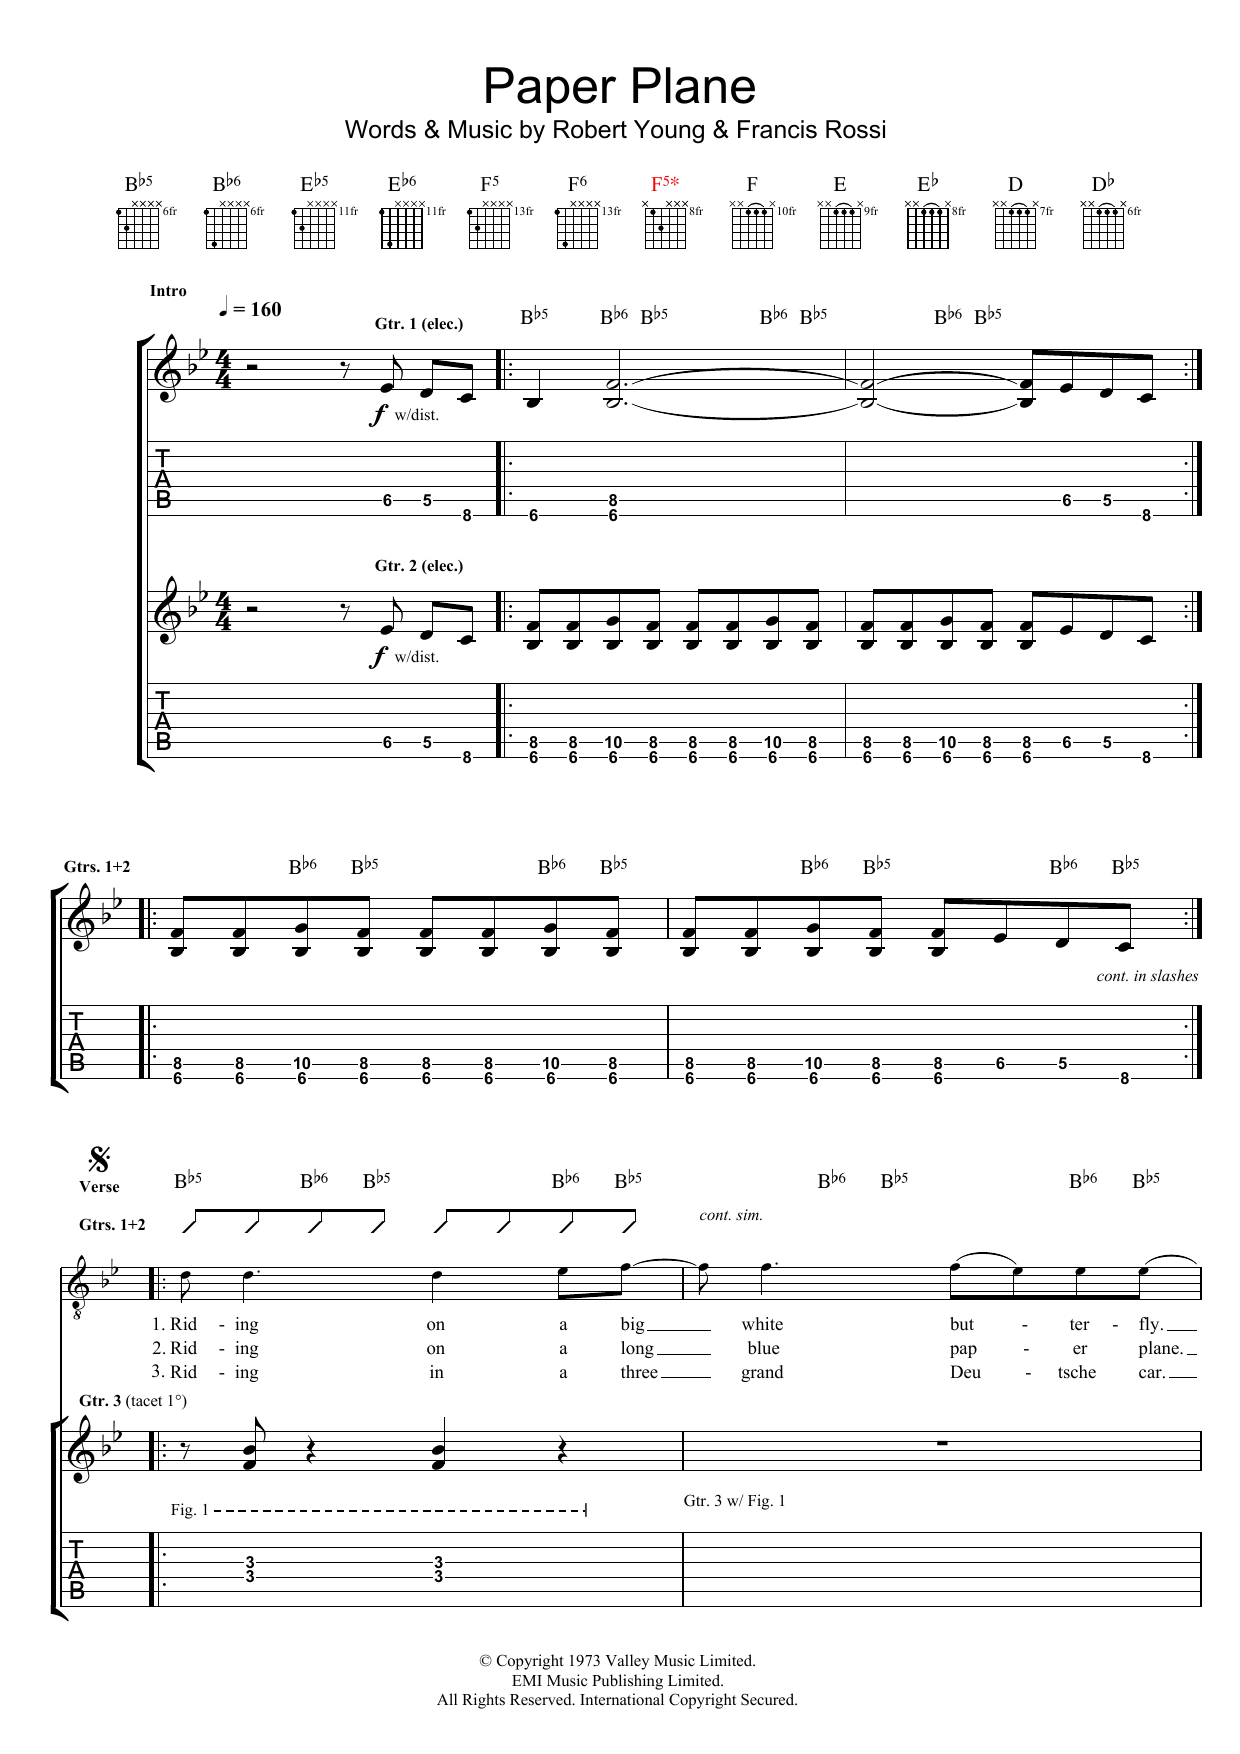 Status Quo Paper Plane Sheet Music Notes & Chords for Lyrics & Chords - Download or Print PDF